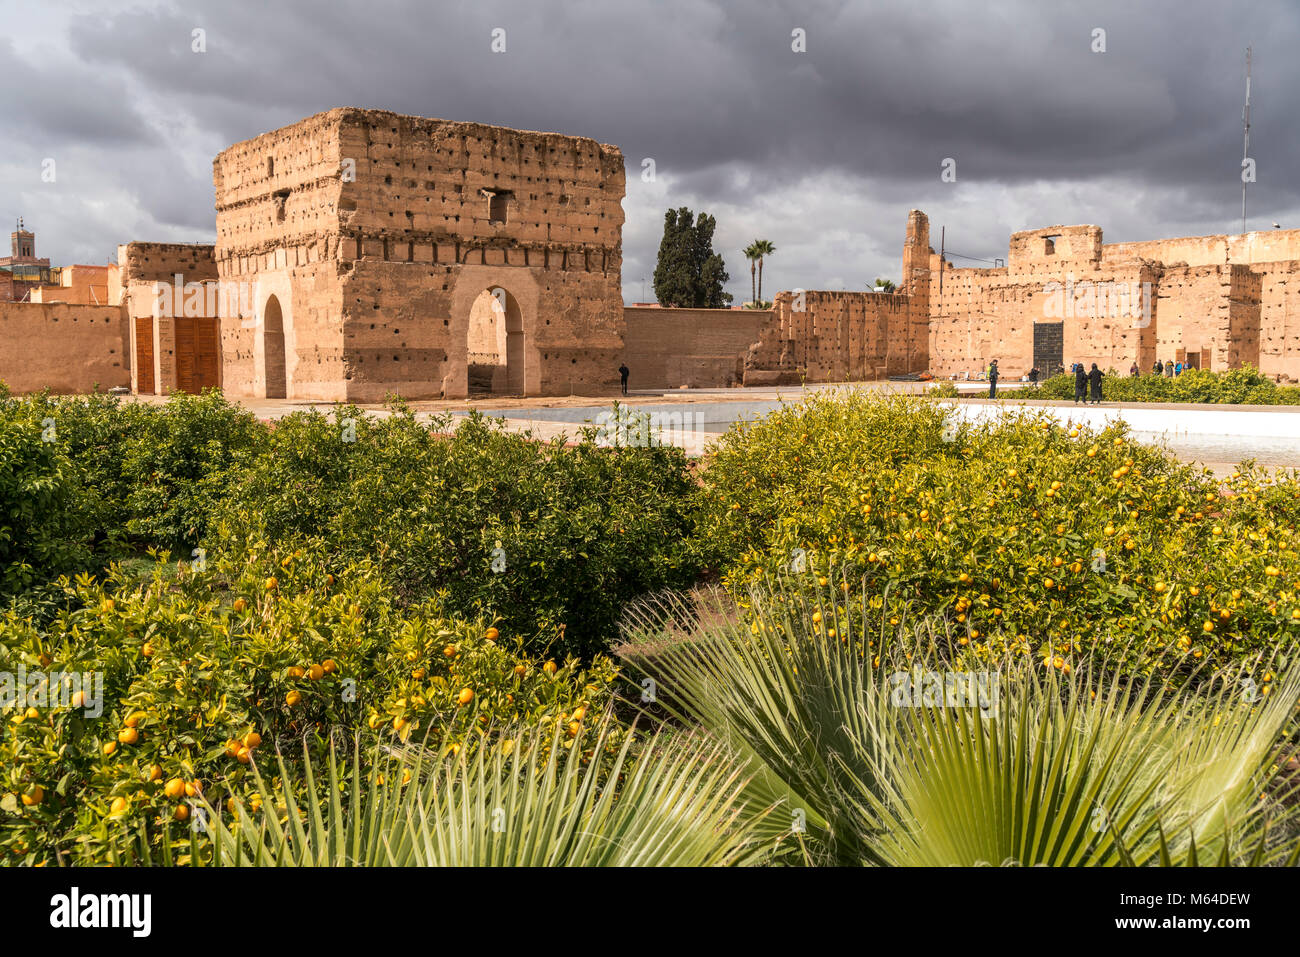 Ruinen des Palais El Badi, Marrakech, Königreich Marokko, Afrika | Palais El Badi ruines, Marrakech, Royaume du Maroc, l'Afrique Banque D'Images